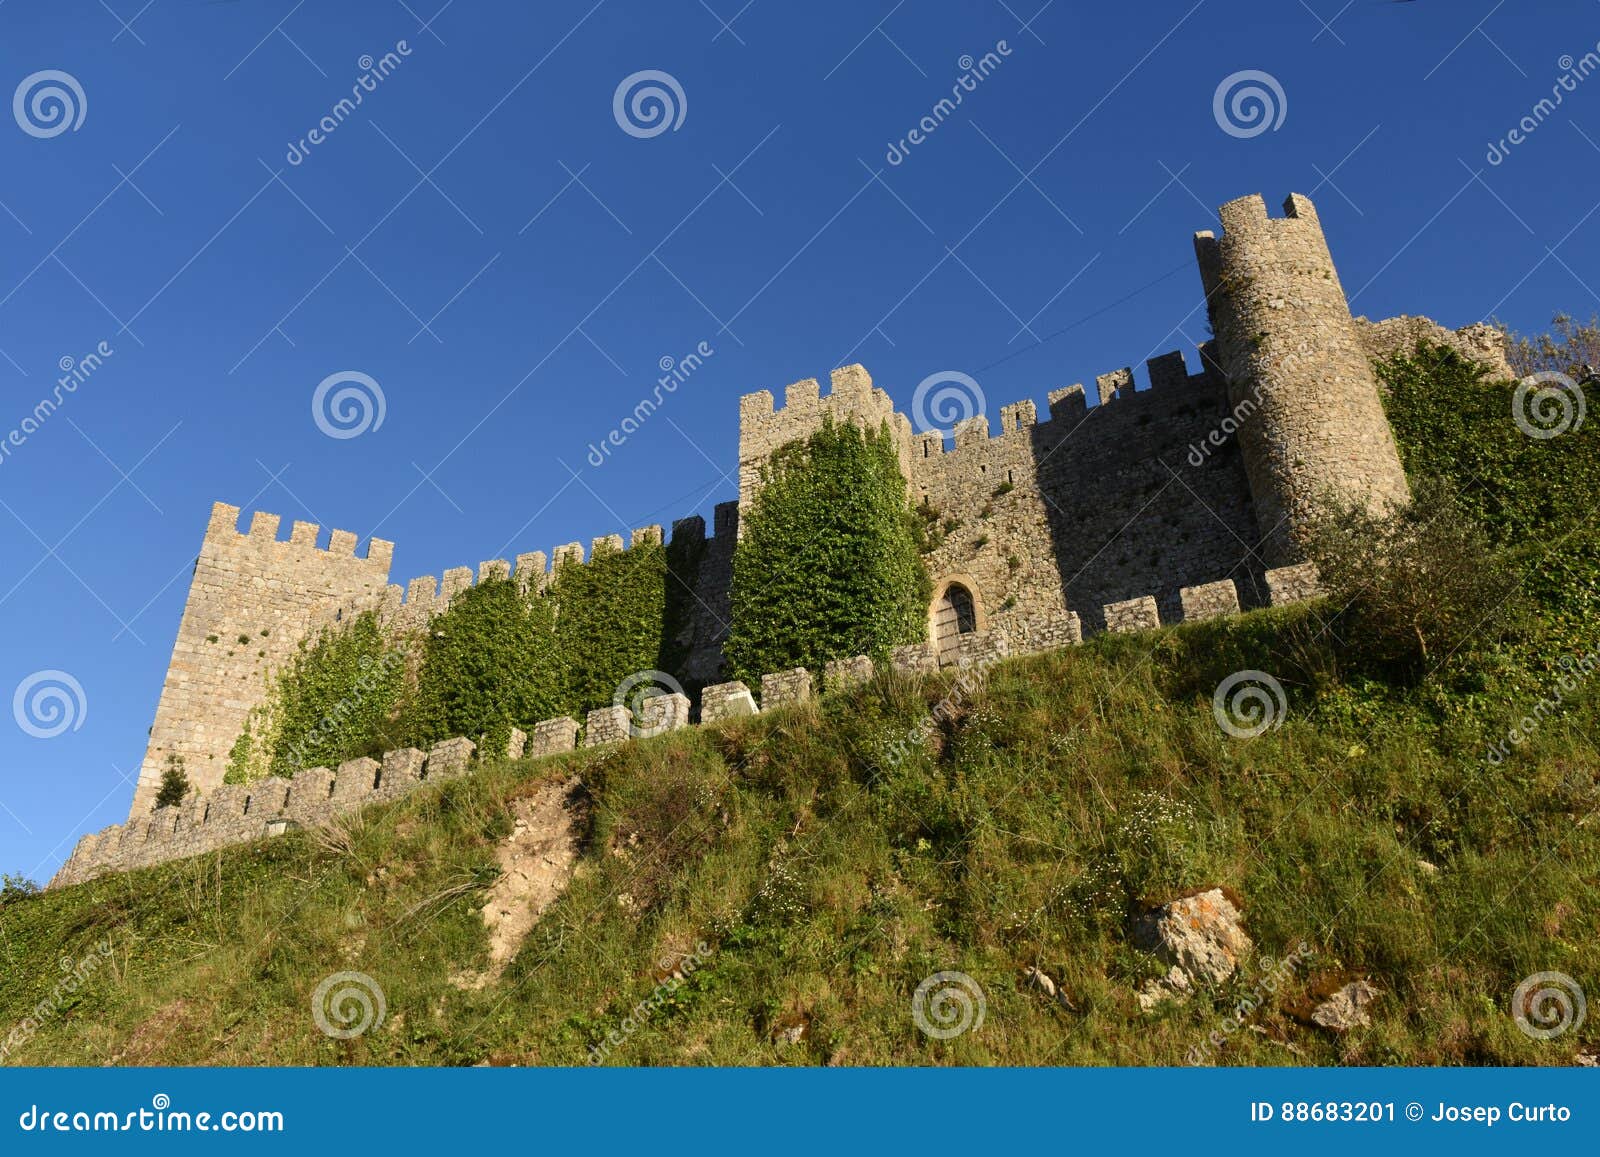 castle of montemor o velho, beiras region,